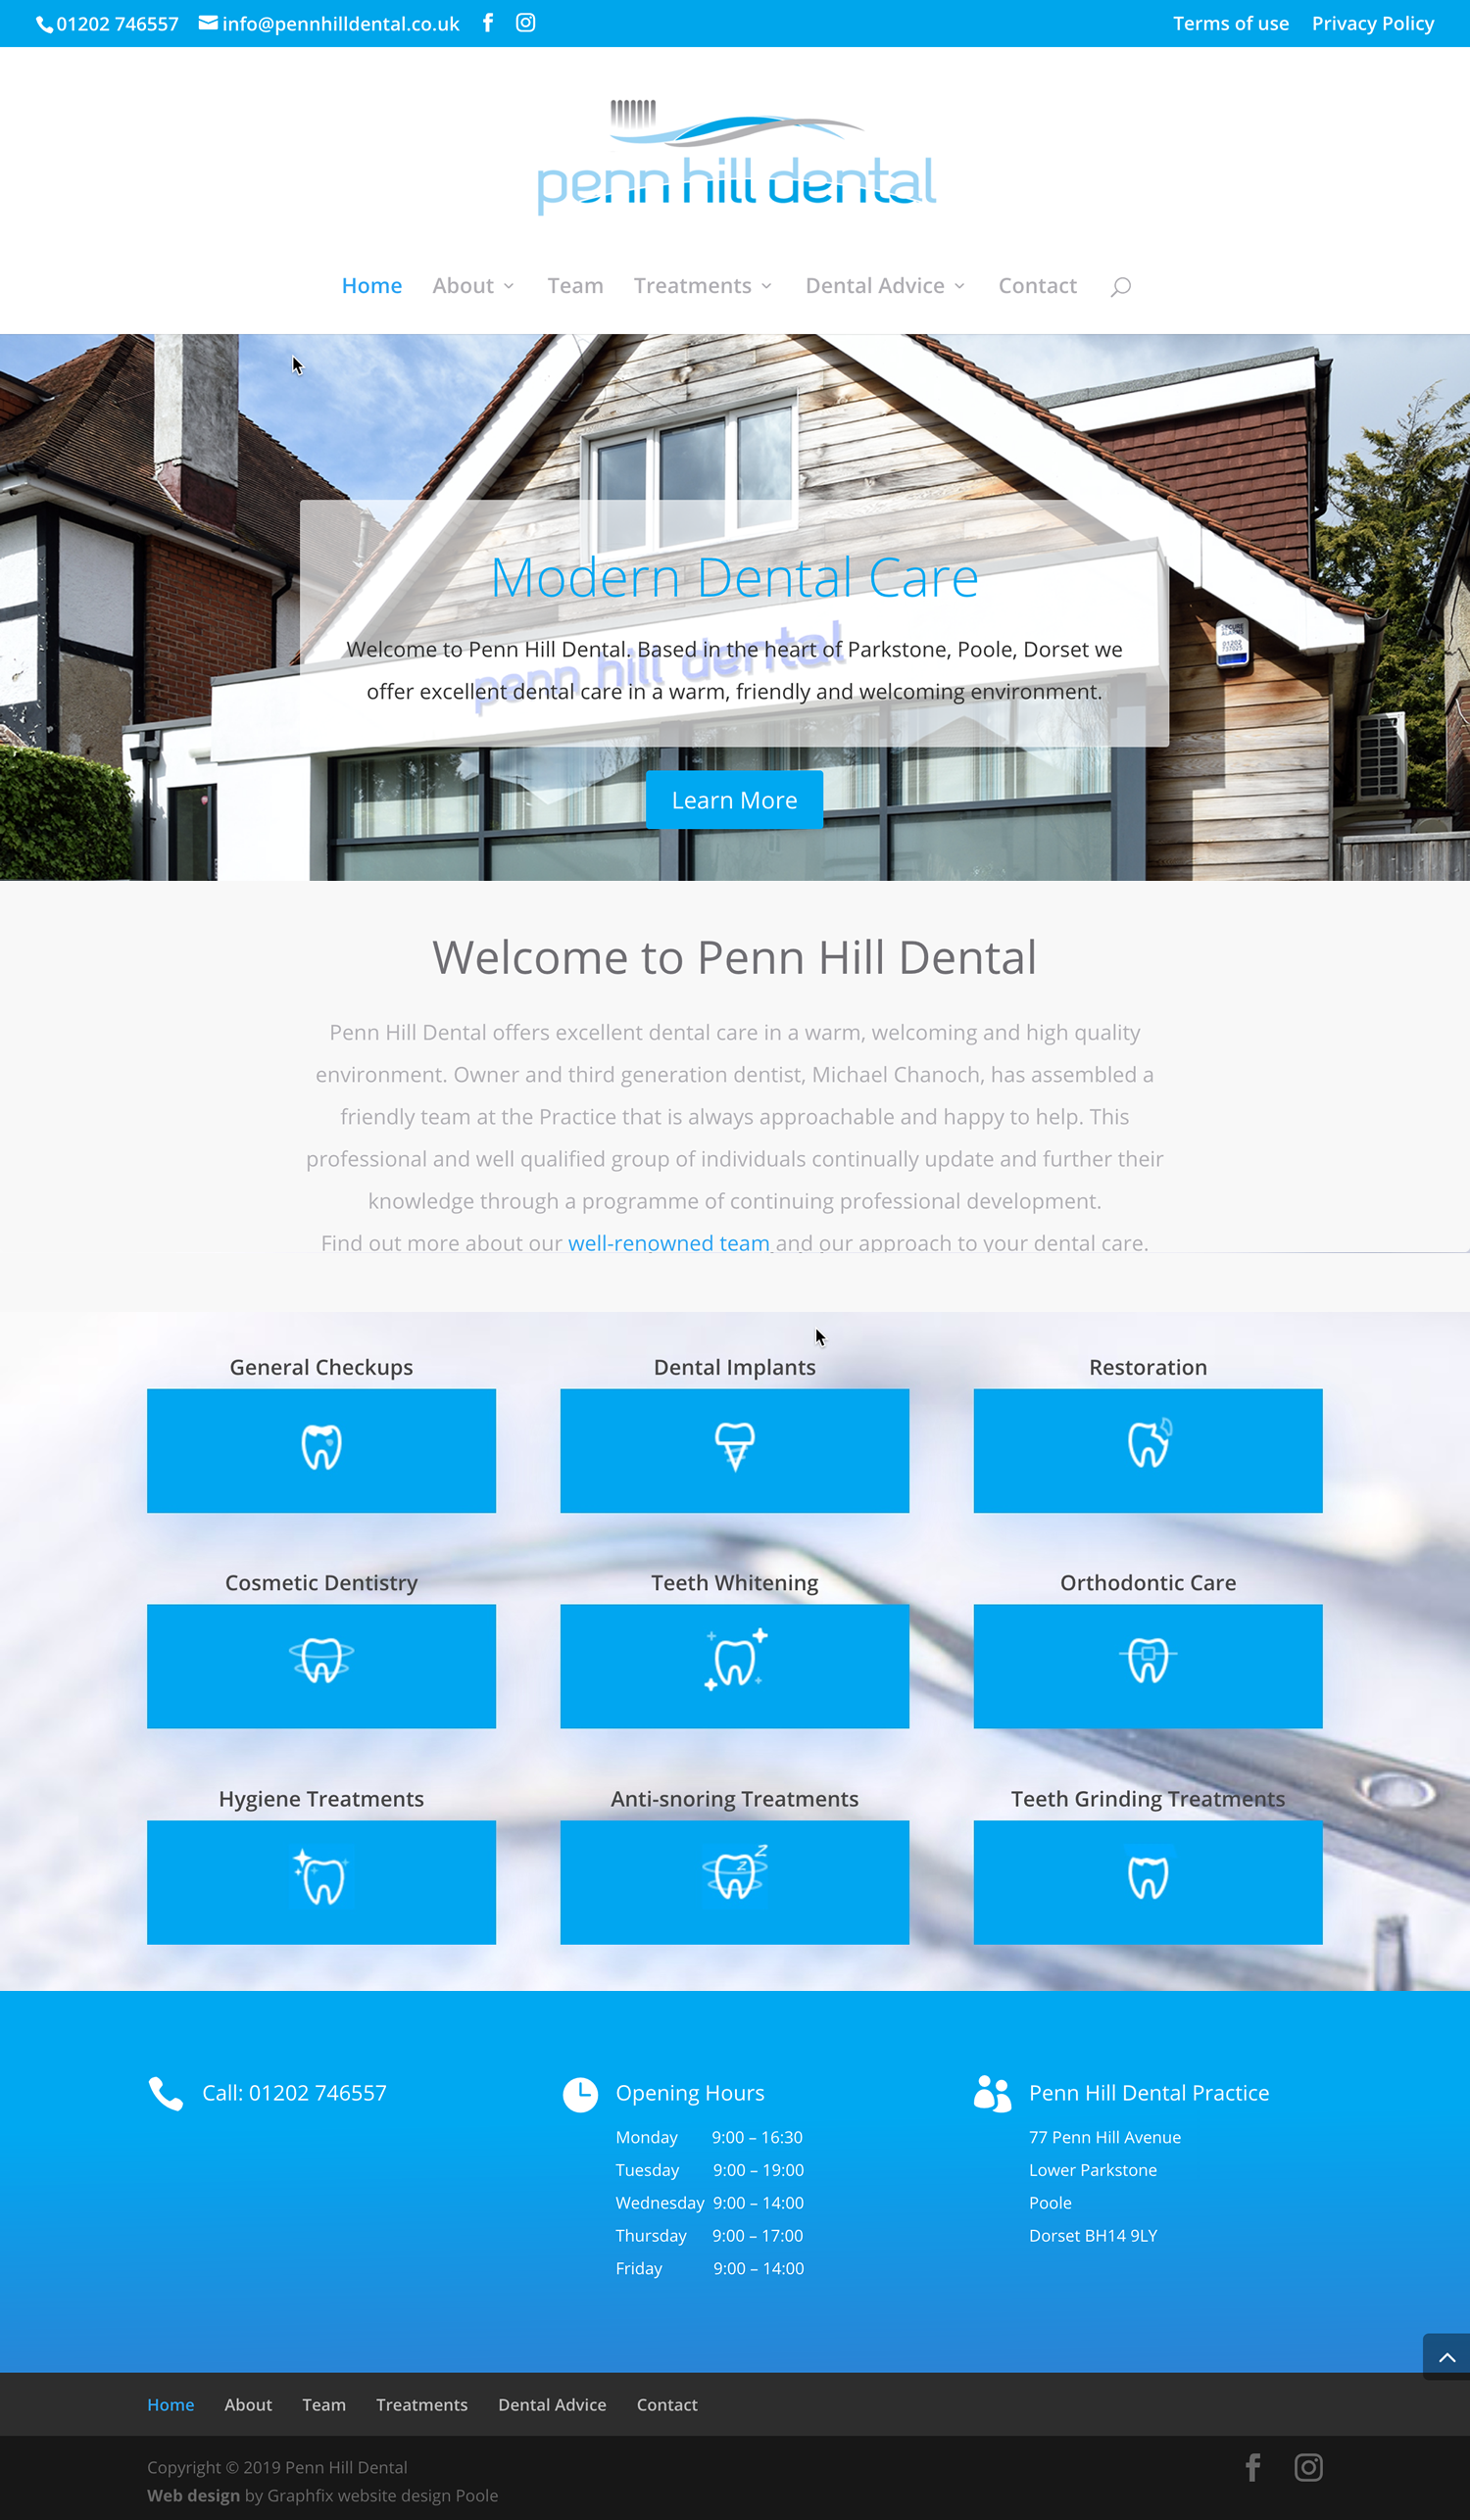 Divi themed WordPress website built for Penn Hill Dental based in Parkstone, Poole